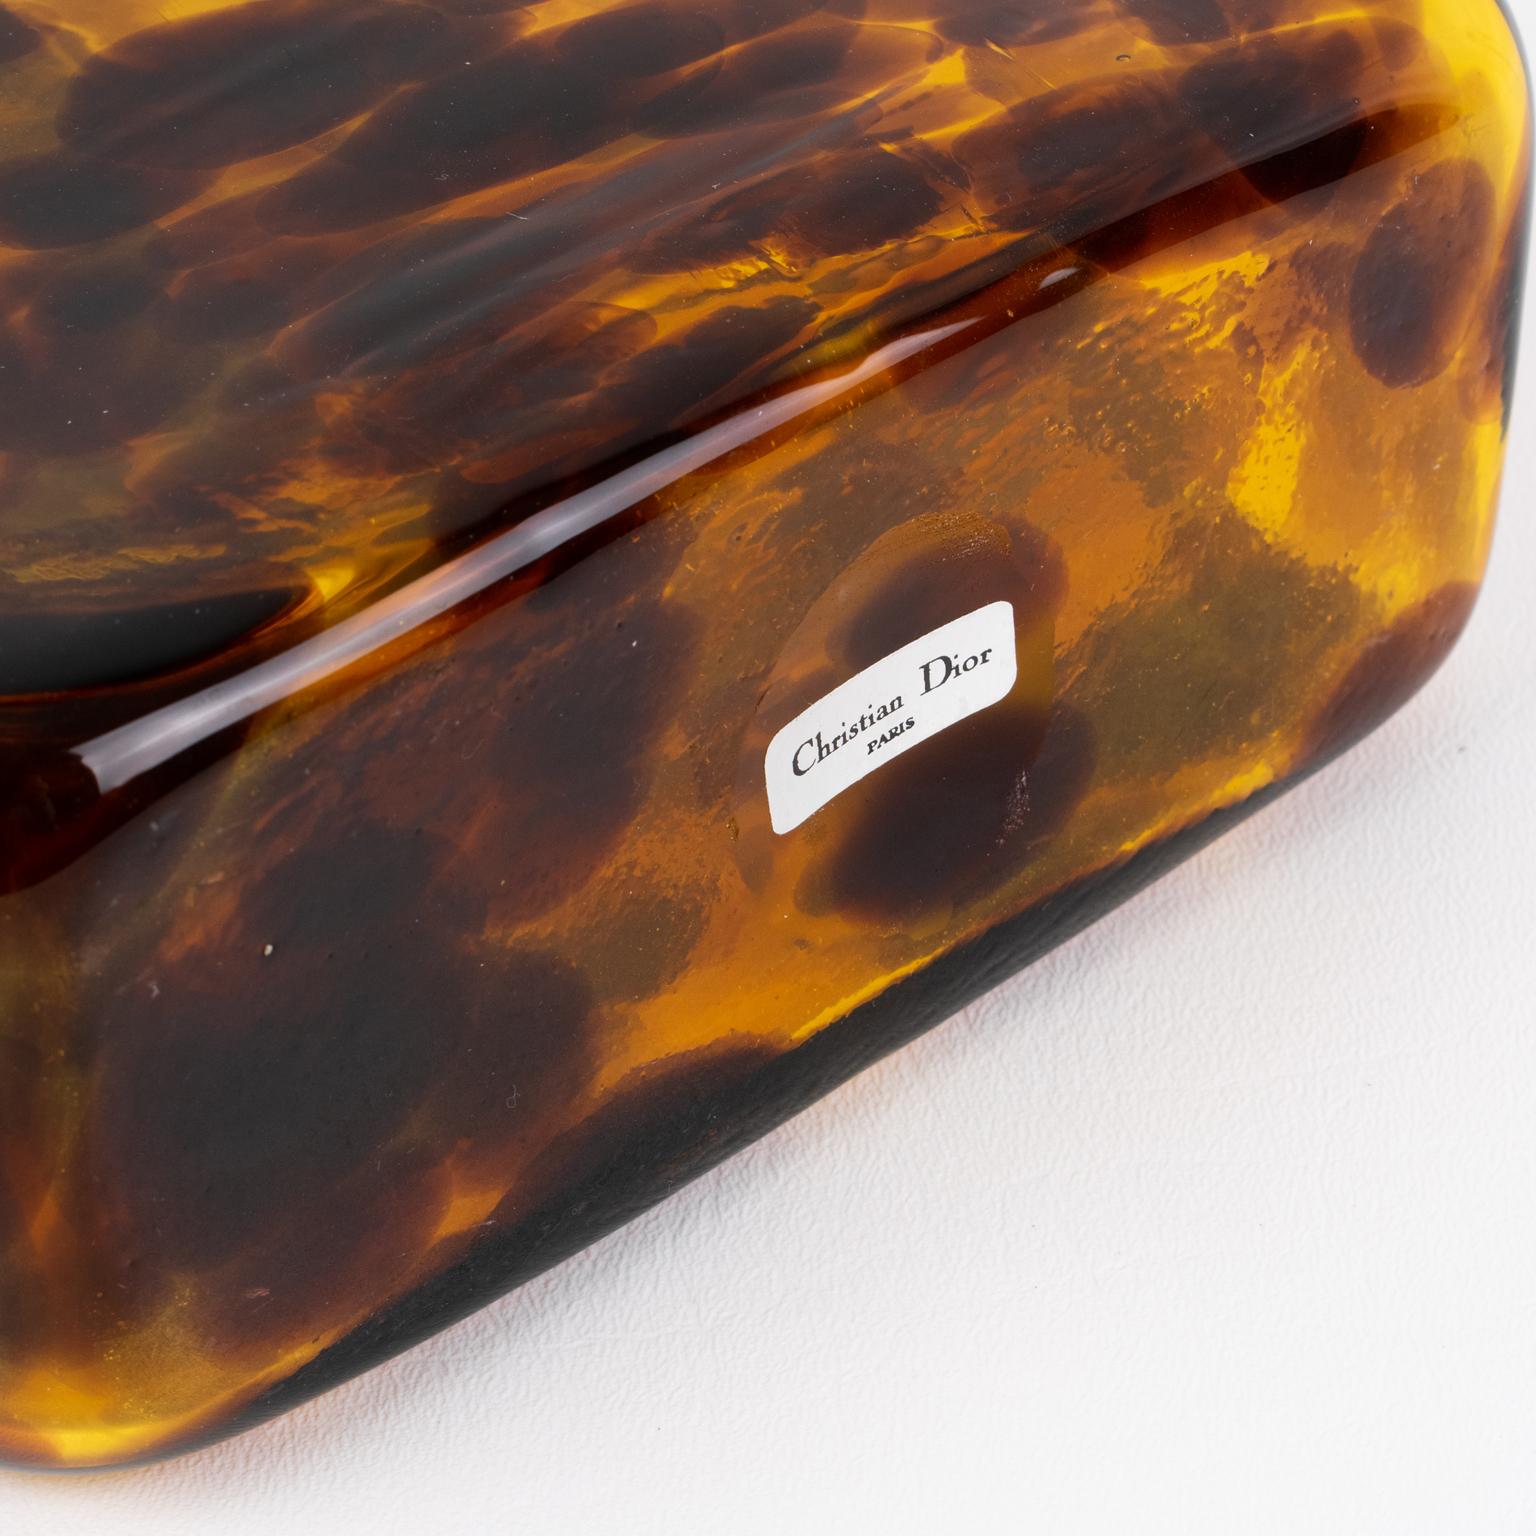 Christian Dior Home Tortoiseshell Glass Barware Set Pitcher and Decanter For Sale 13